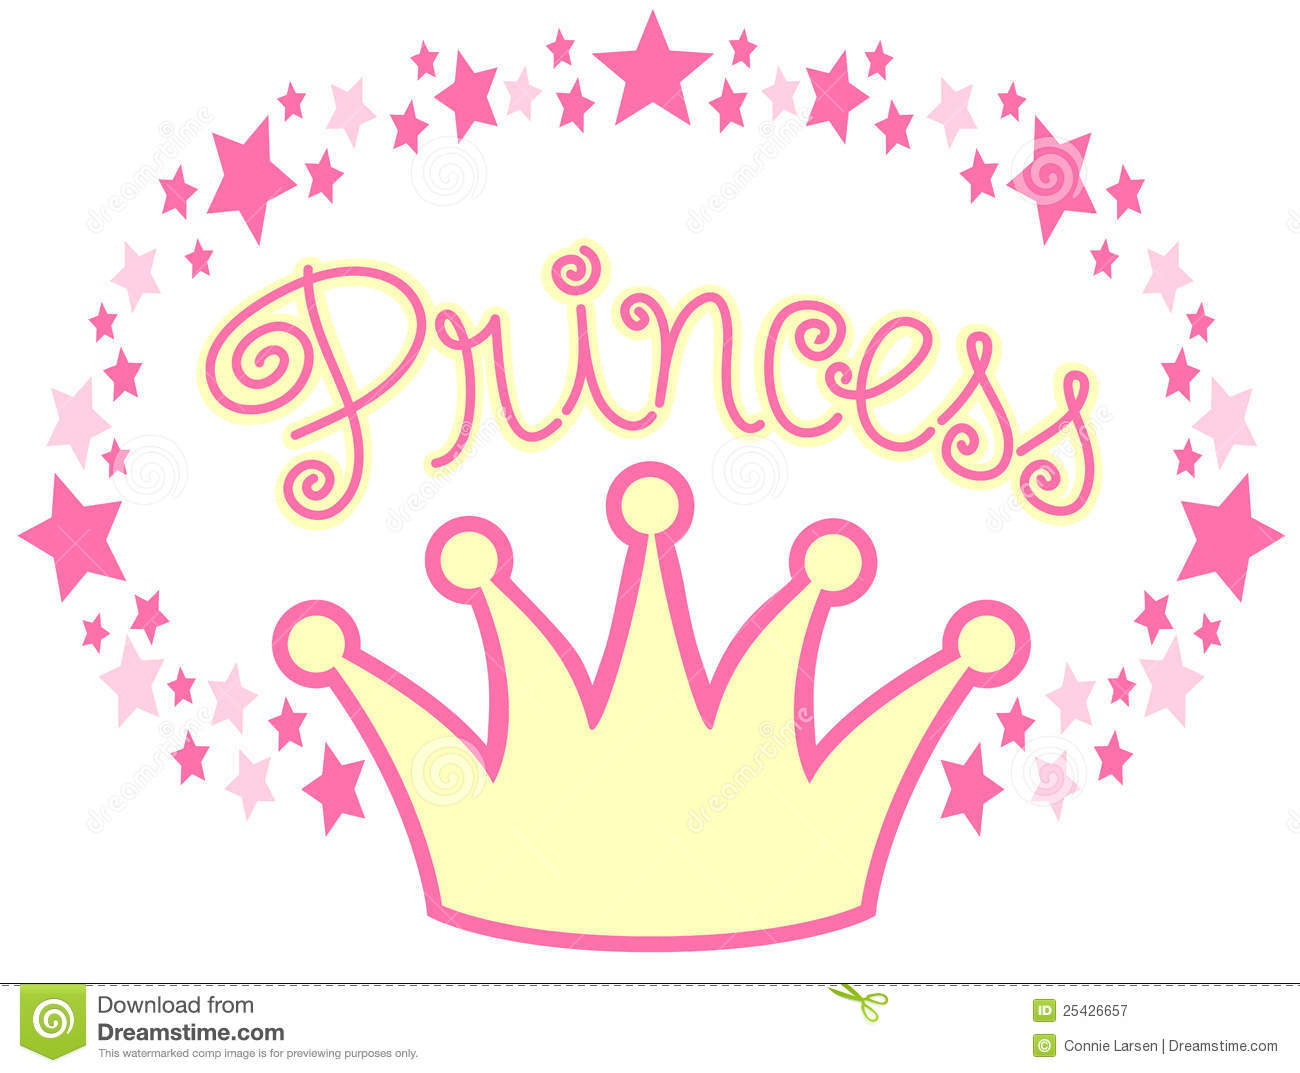 Princess Crown Eps Royalty Free Stock Photography   Image  25426657